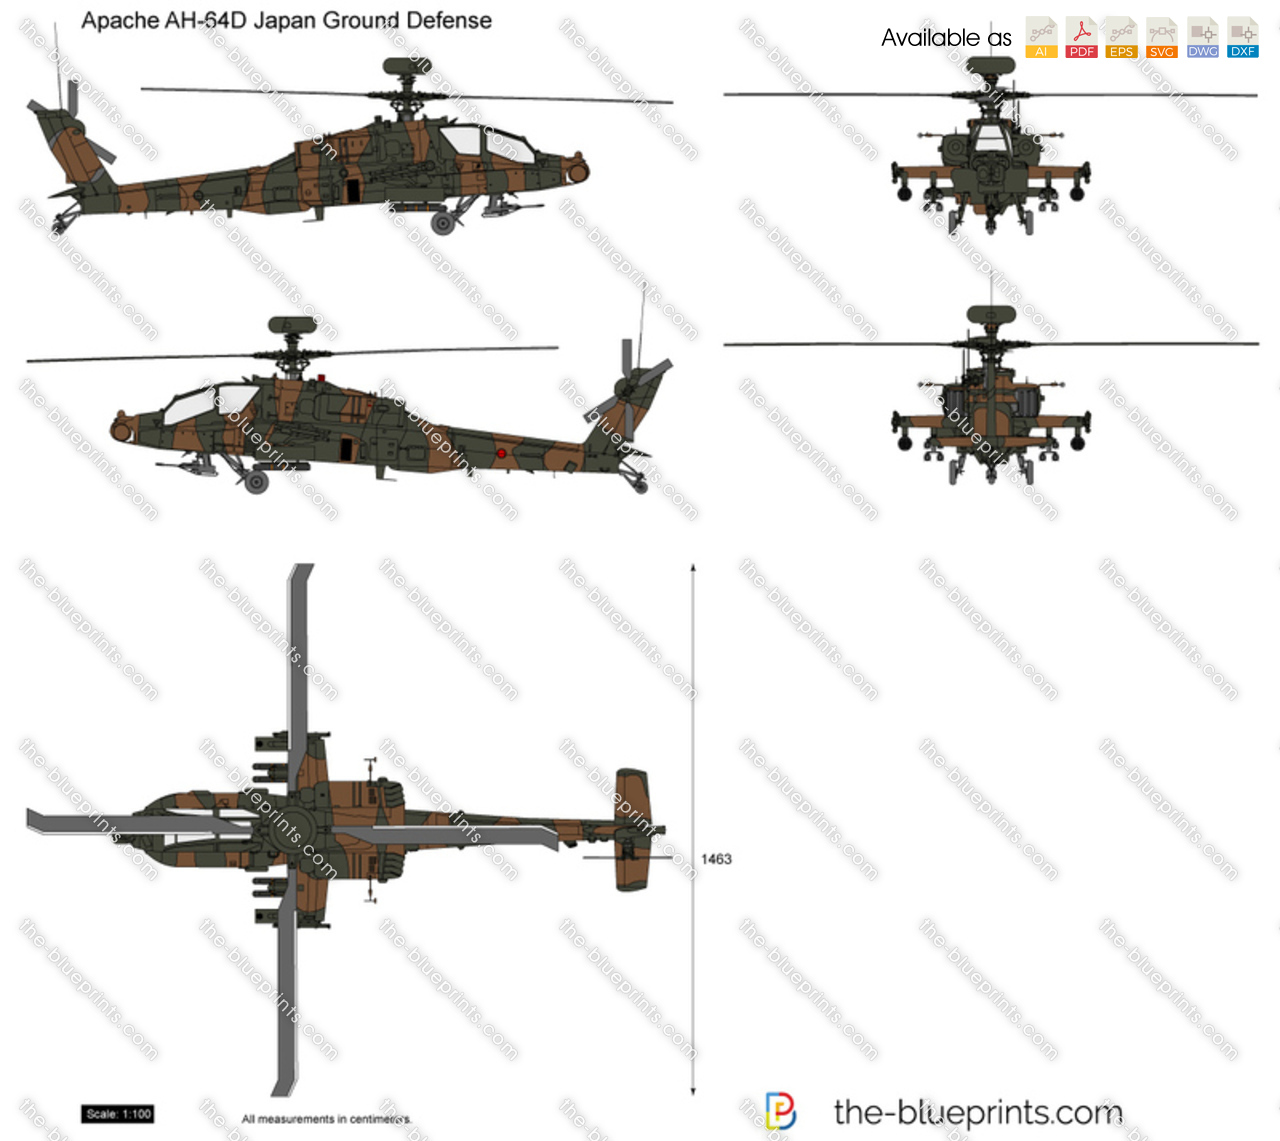 Apache AH-64D Japan Ground Defense